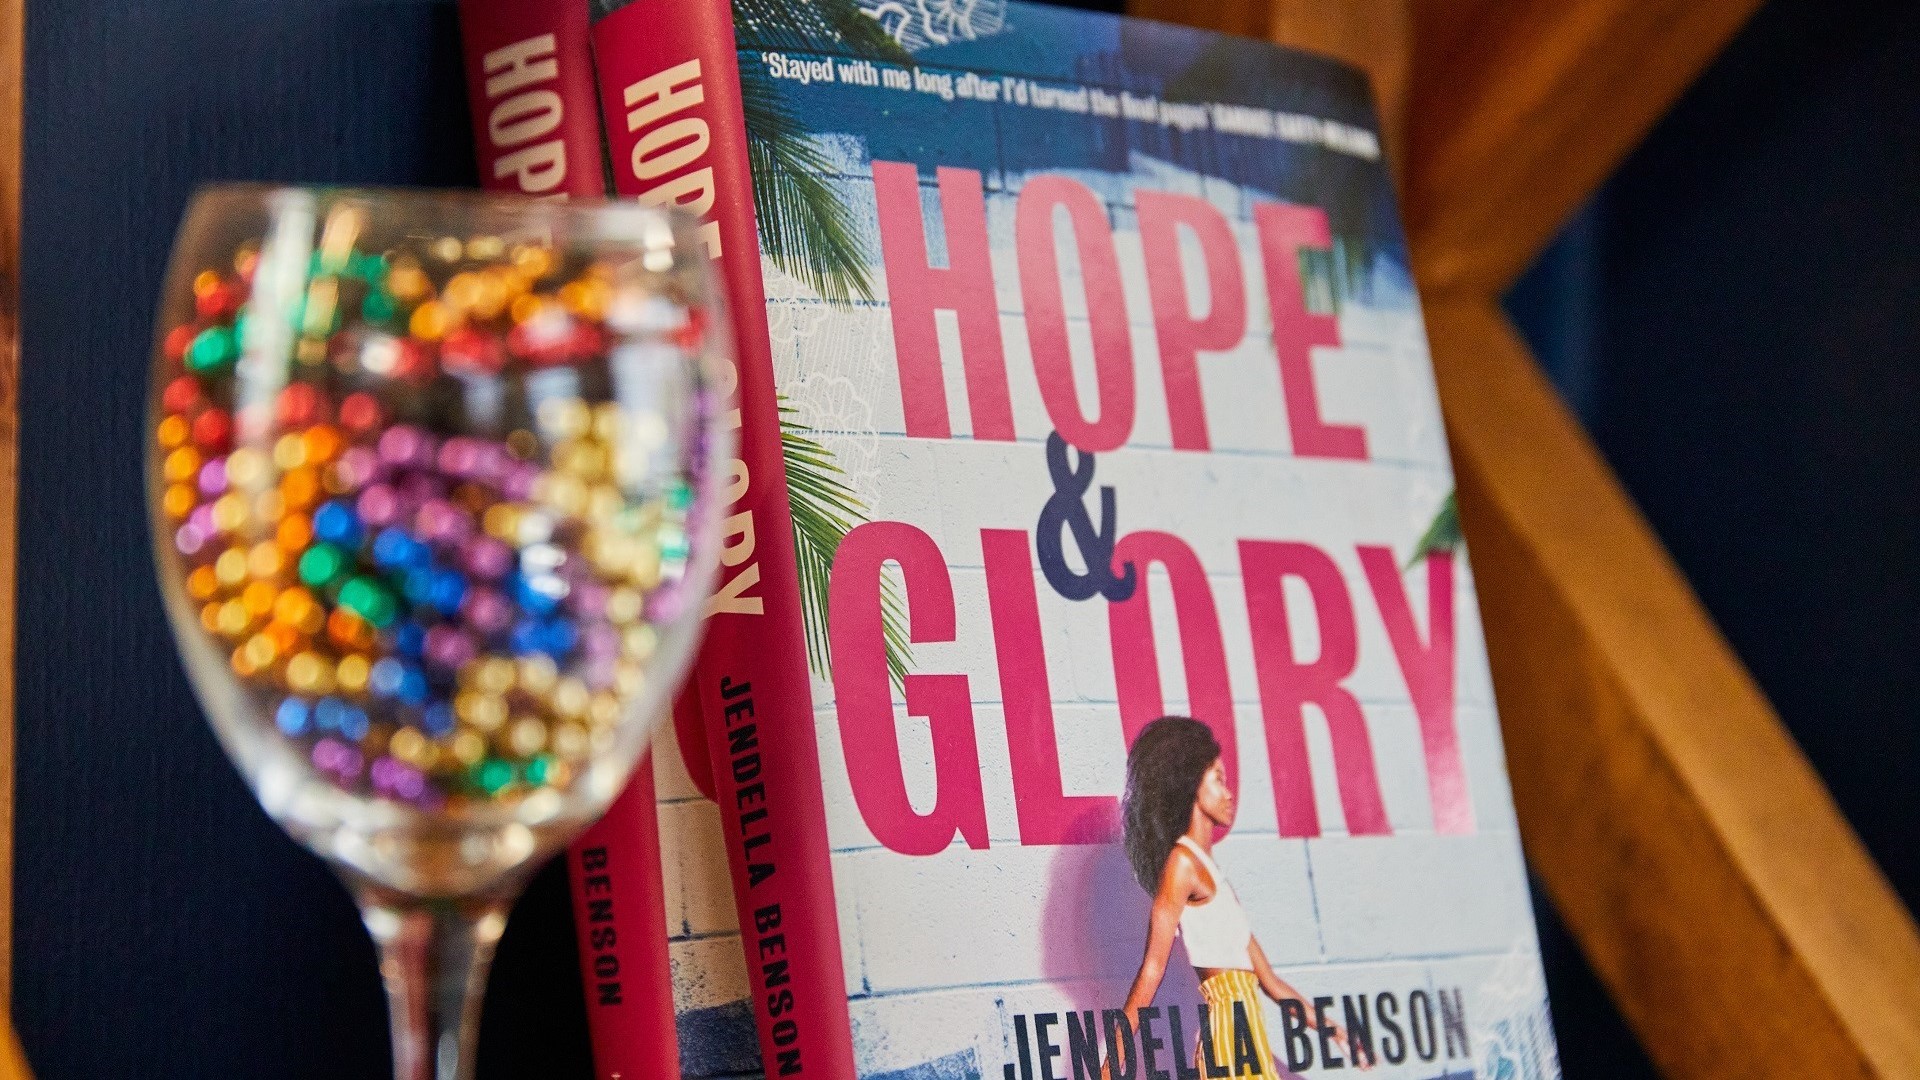 Hope & Glory book by Jendella Benson